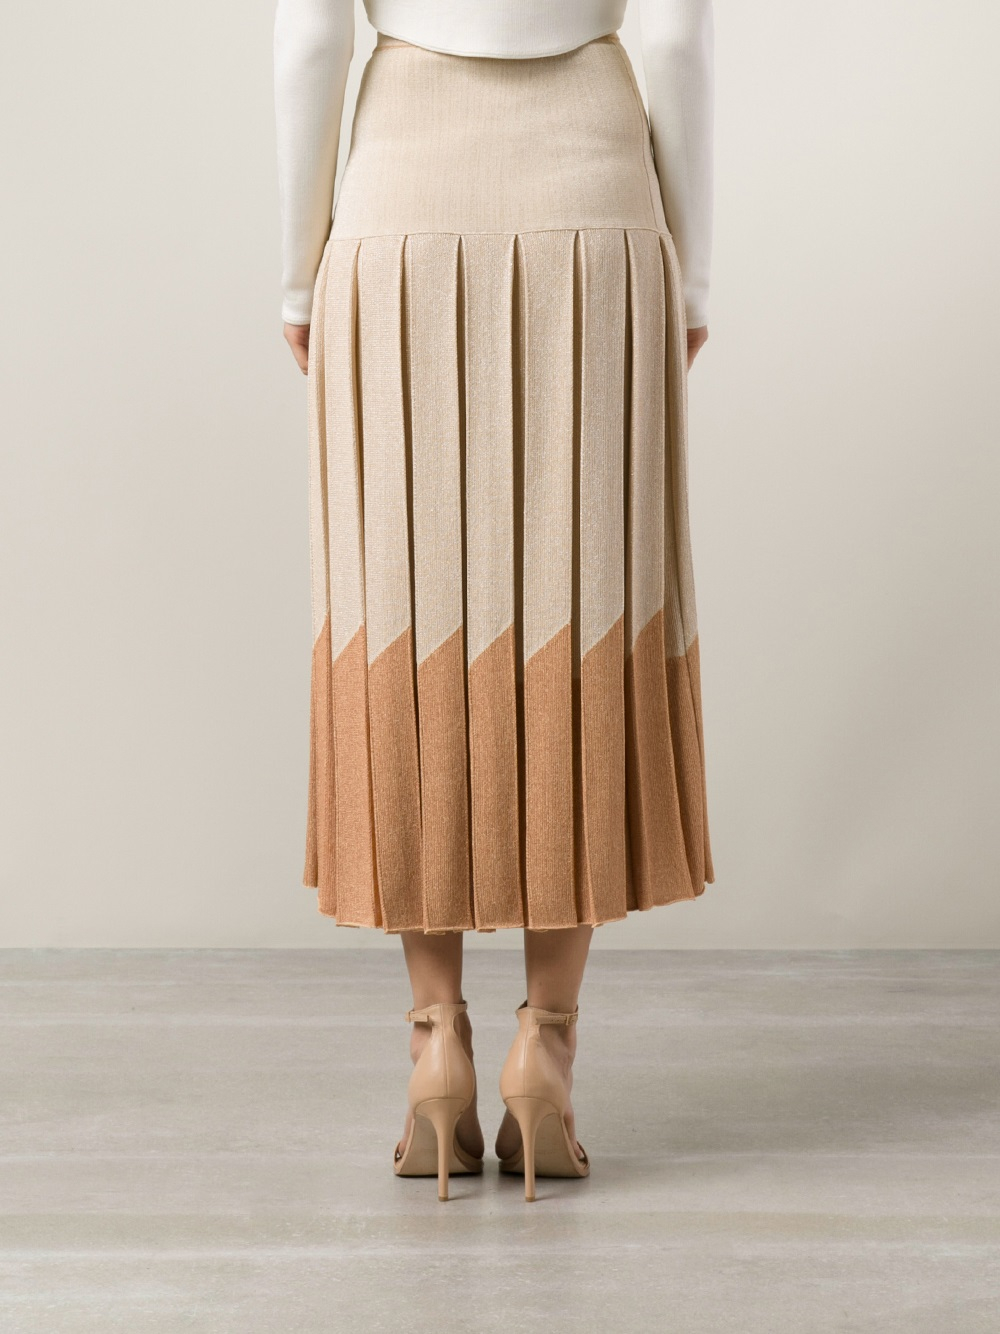 Sonia Rykiel Bicolor Pleated Skirt in Natural | Lyst